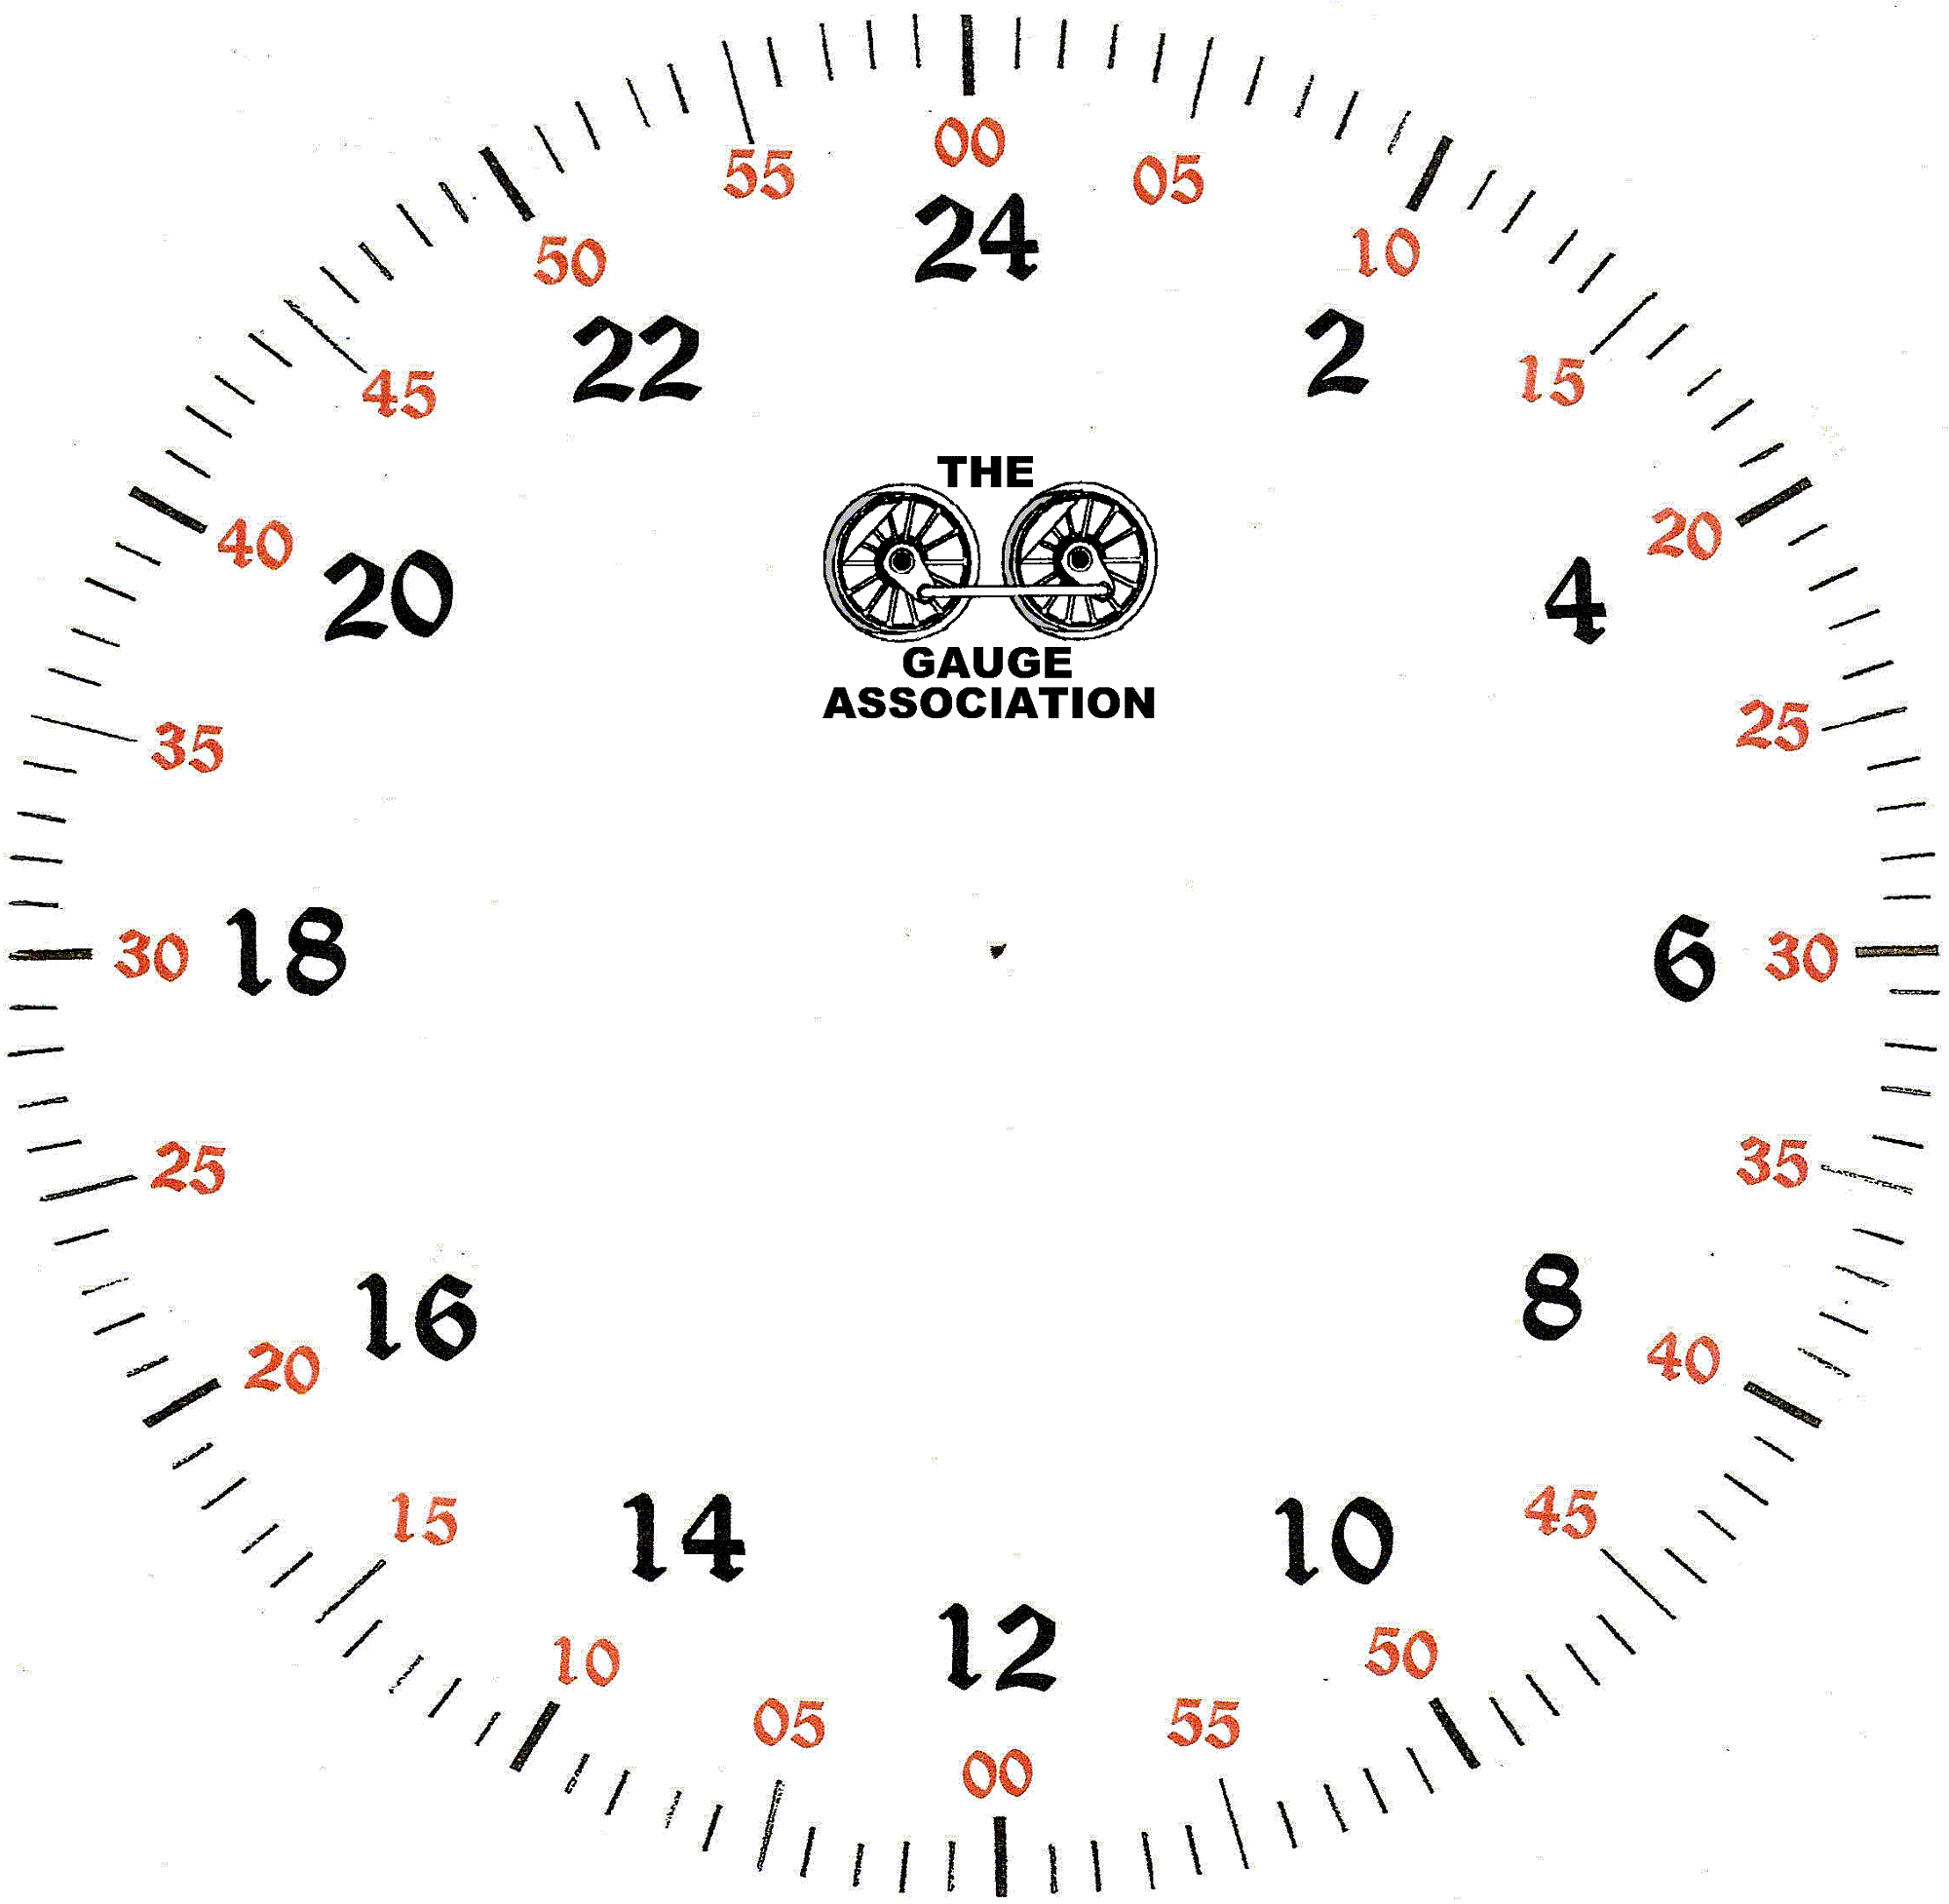 Printable Military Time Clock